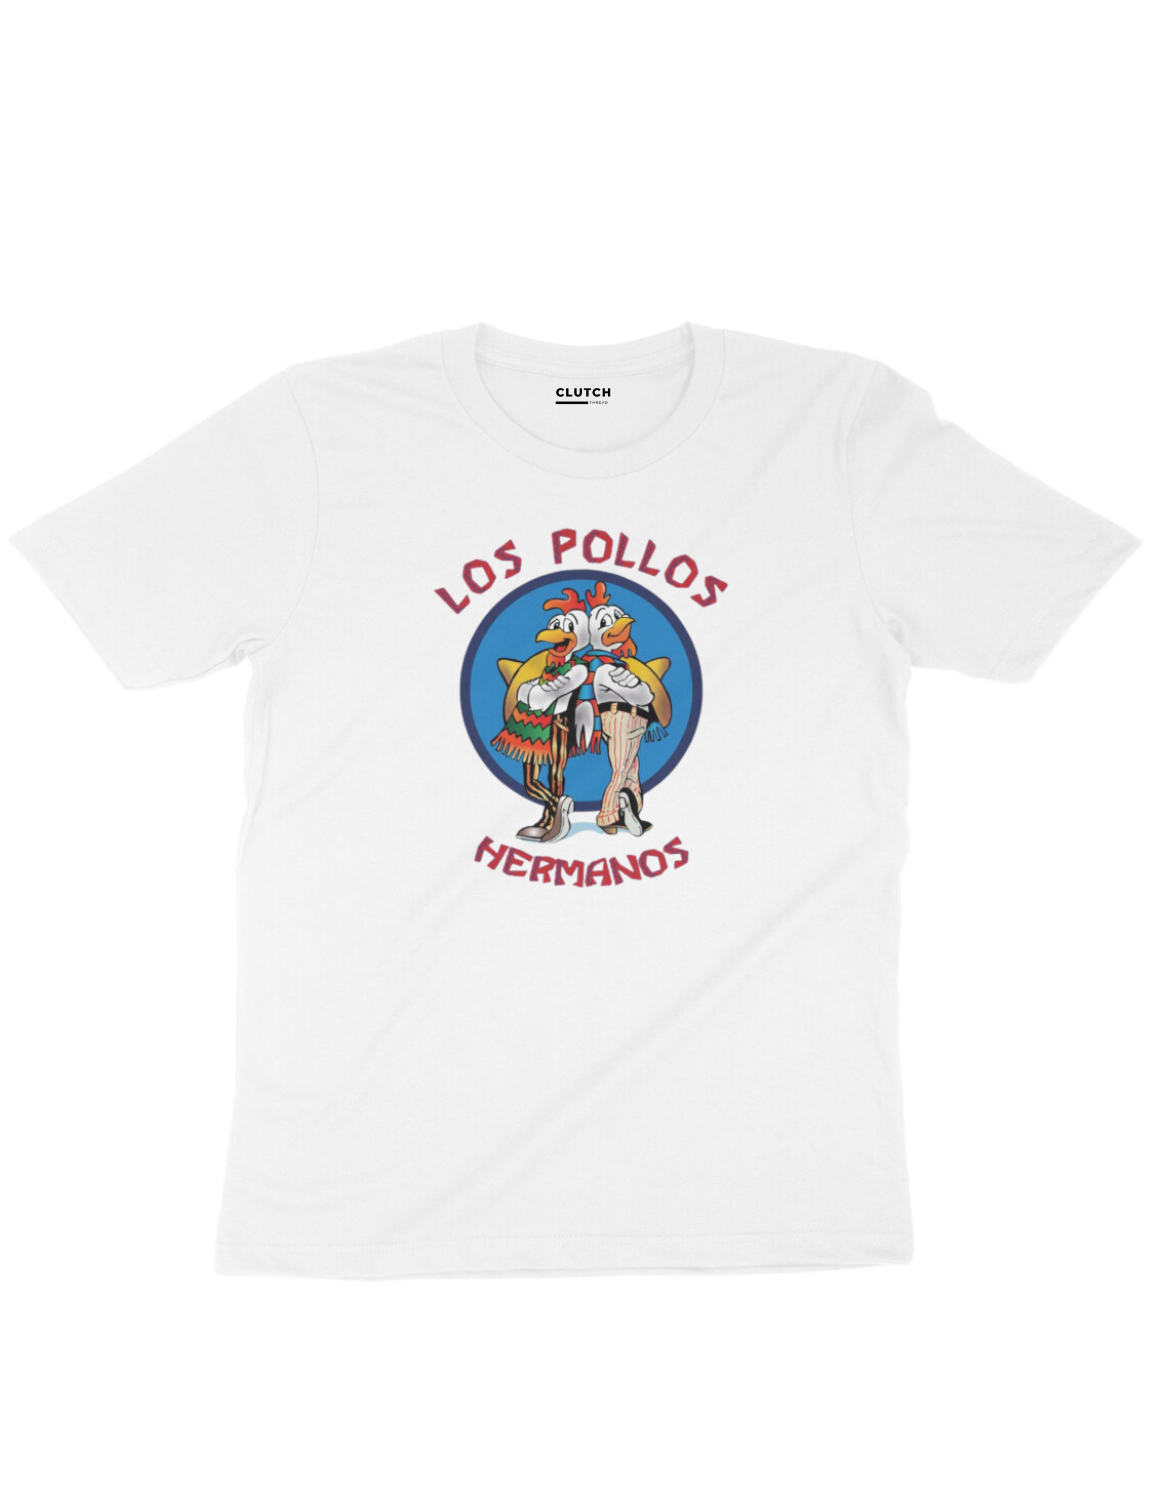 Los Pollos- Breaking Bad- Half Sleeve T-Shirt